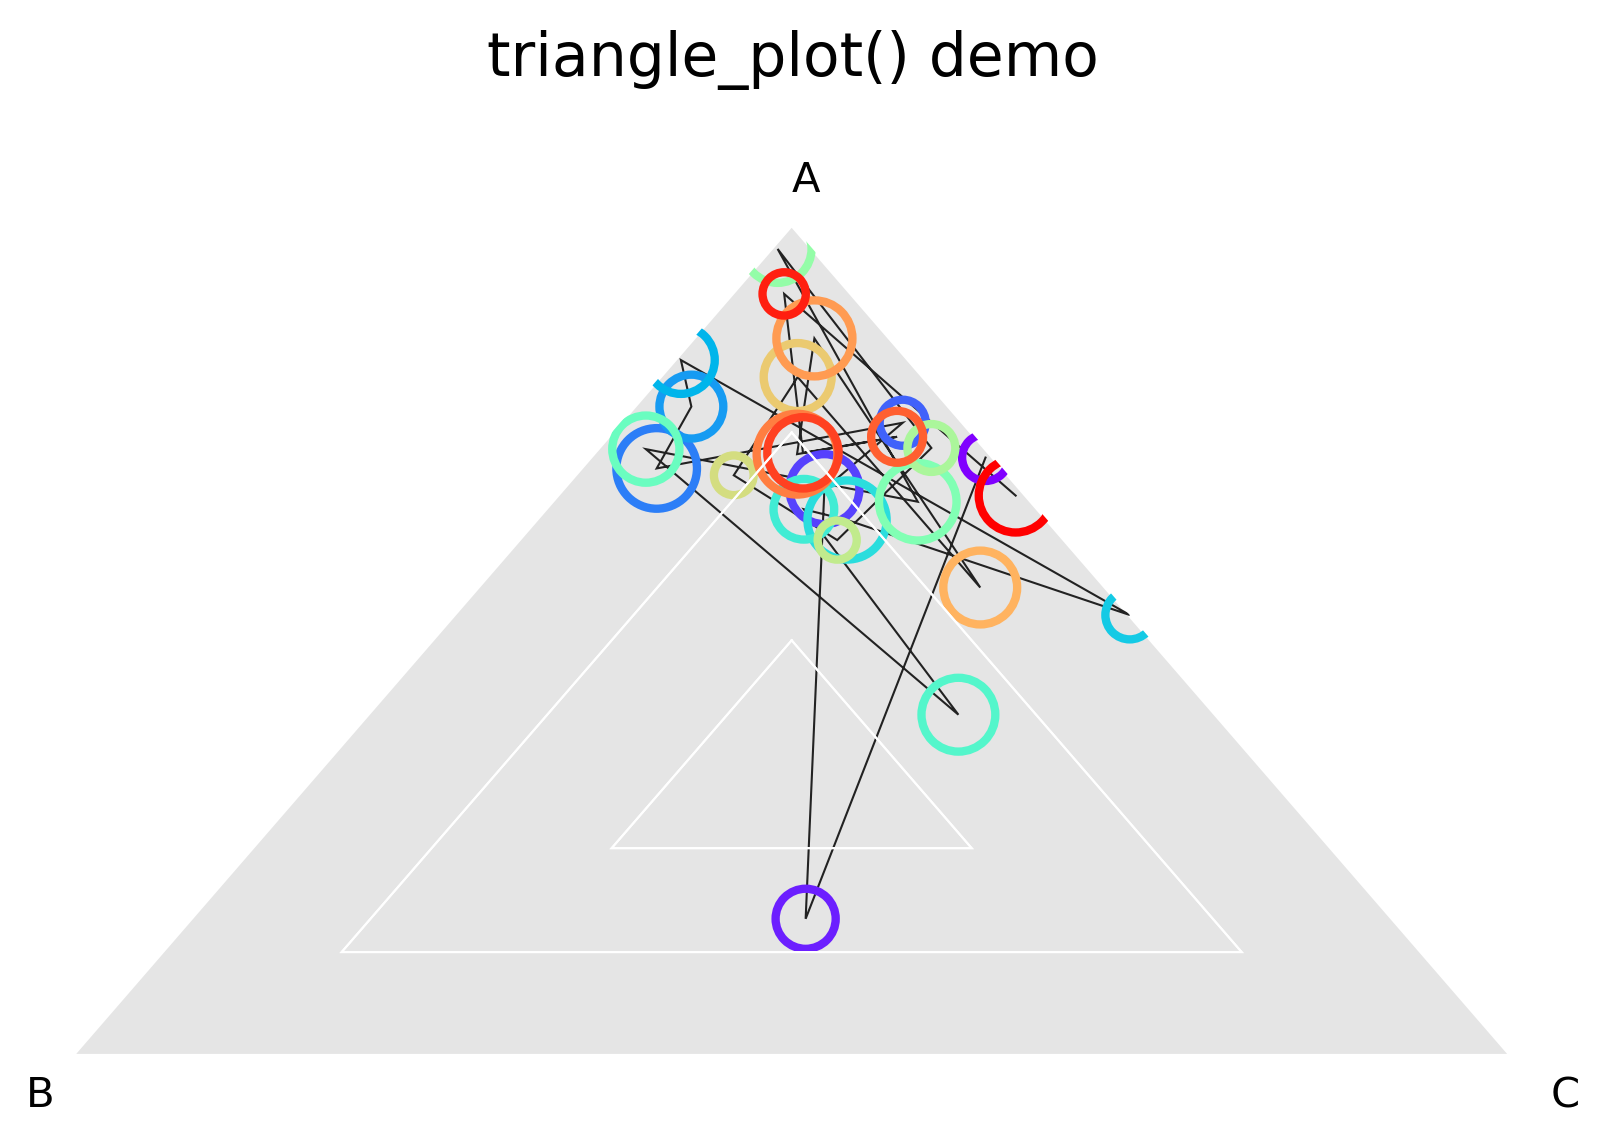 Triangle plot